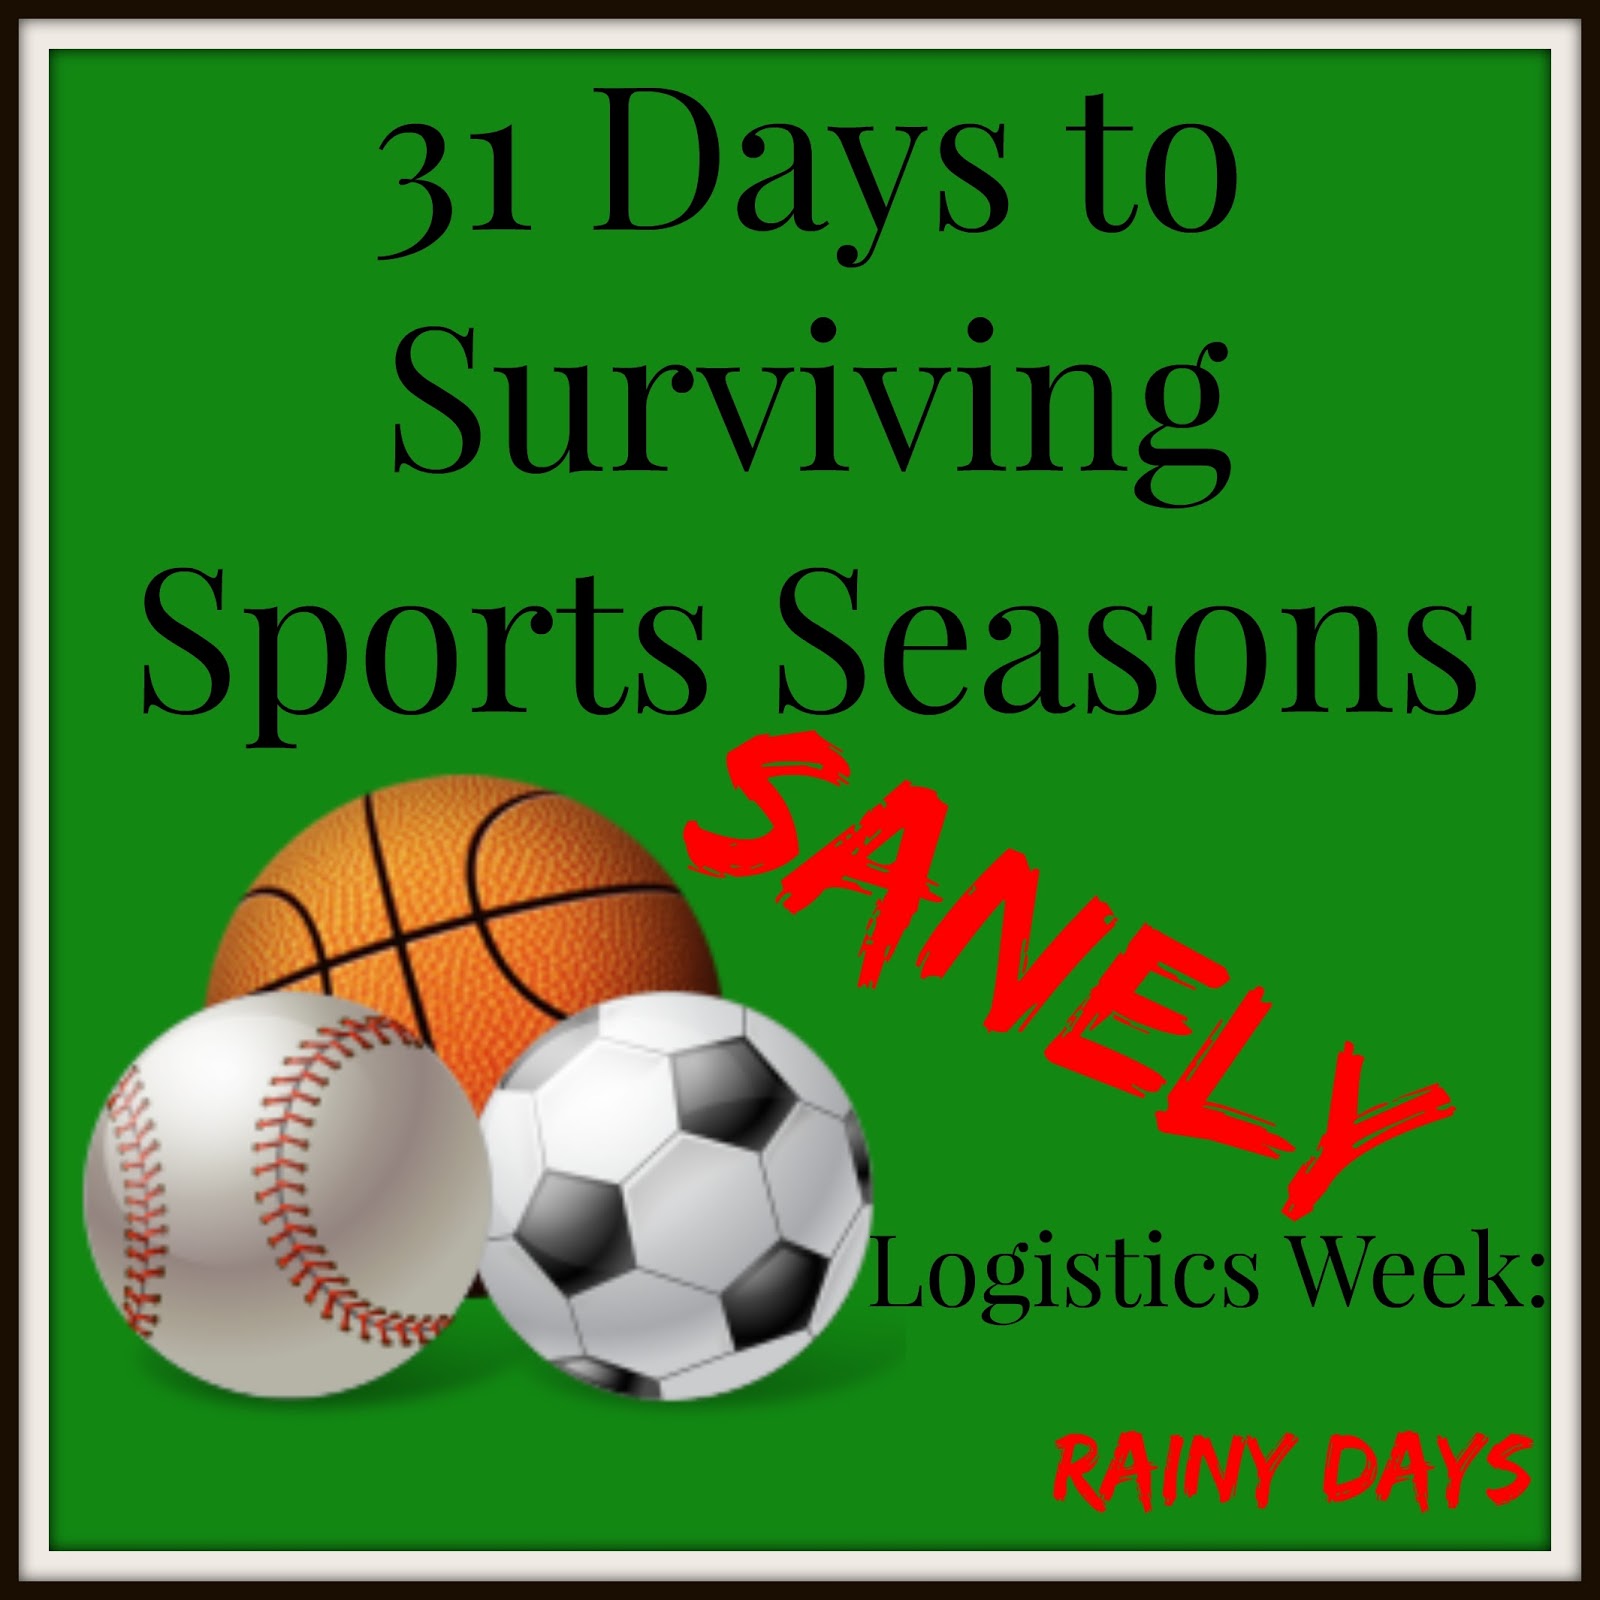 31 Days to Surviving Sports Seasons Sanely: Rainy Days